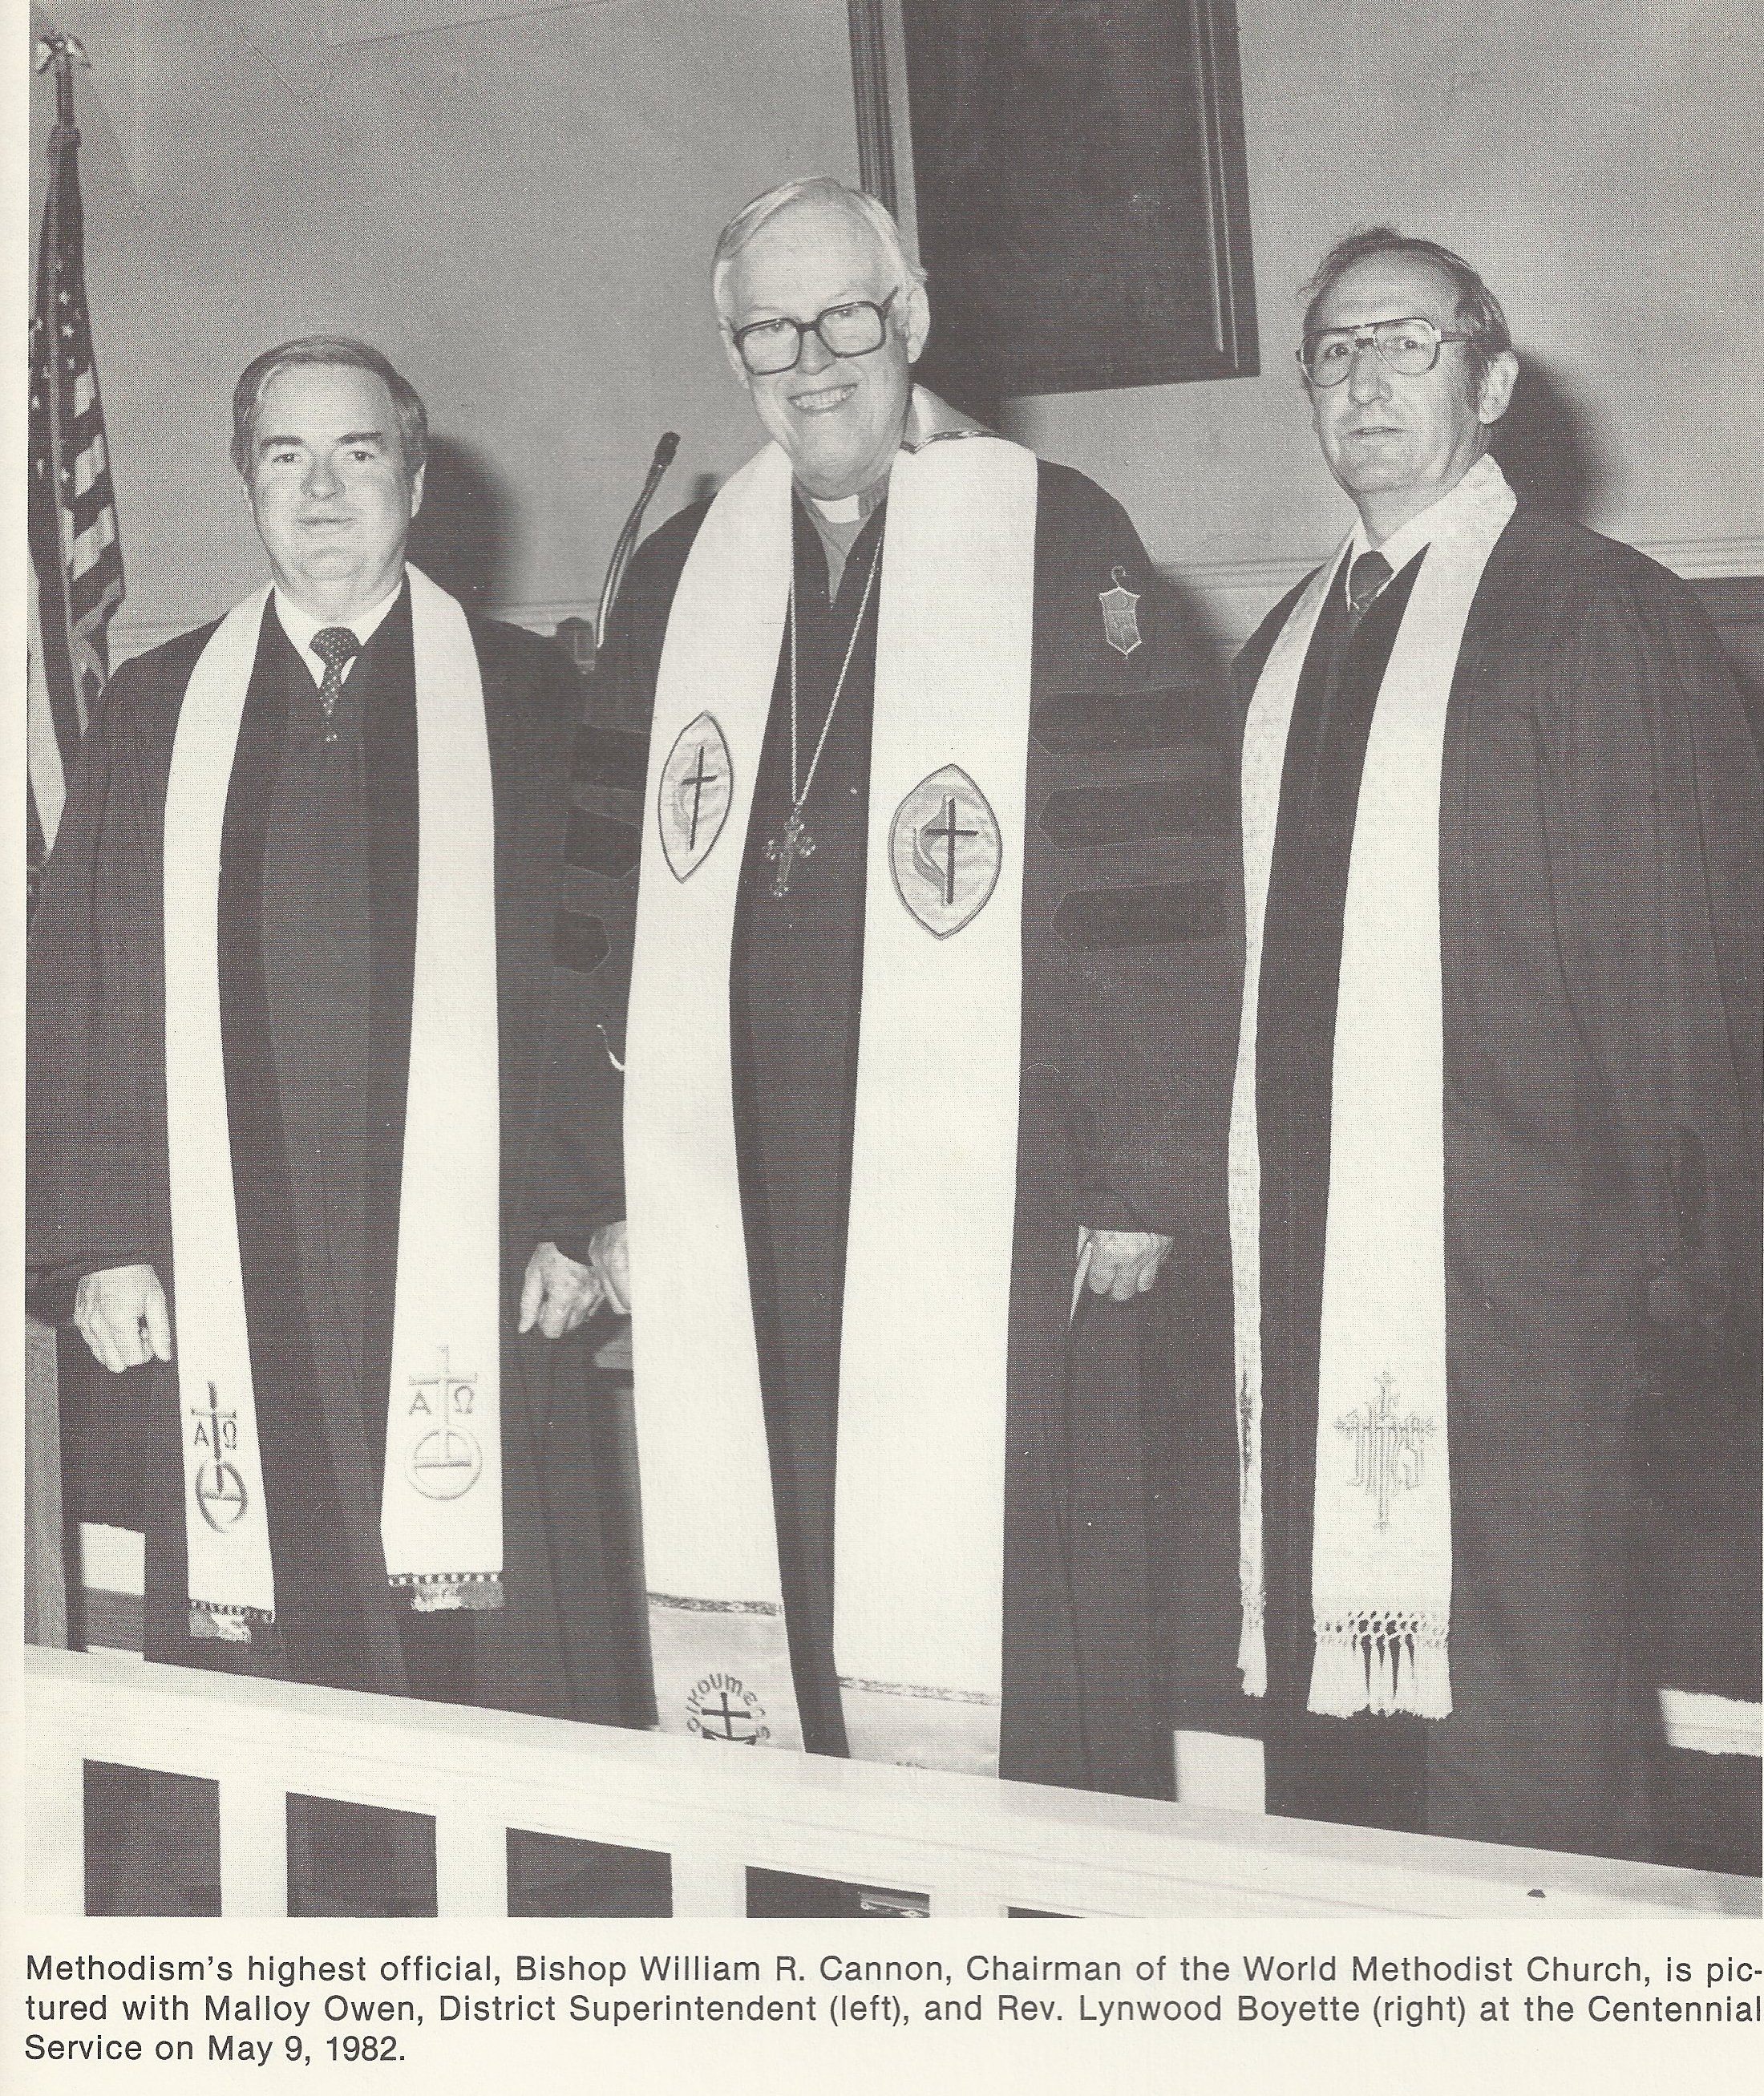 May 9 1982. Mallory Owen Dist. Superintendent, Bishop W. R. Cannon, Rev. L Boyette at Centennial Service